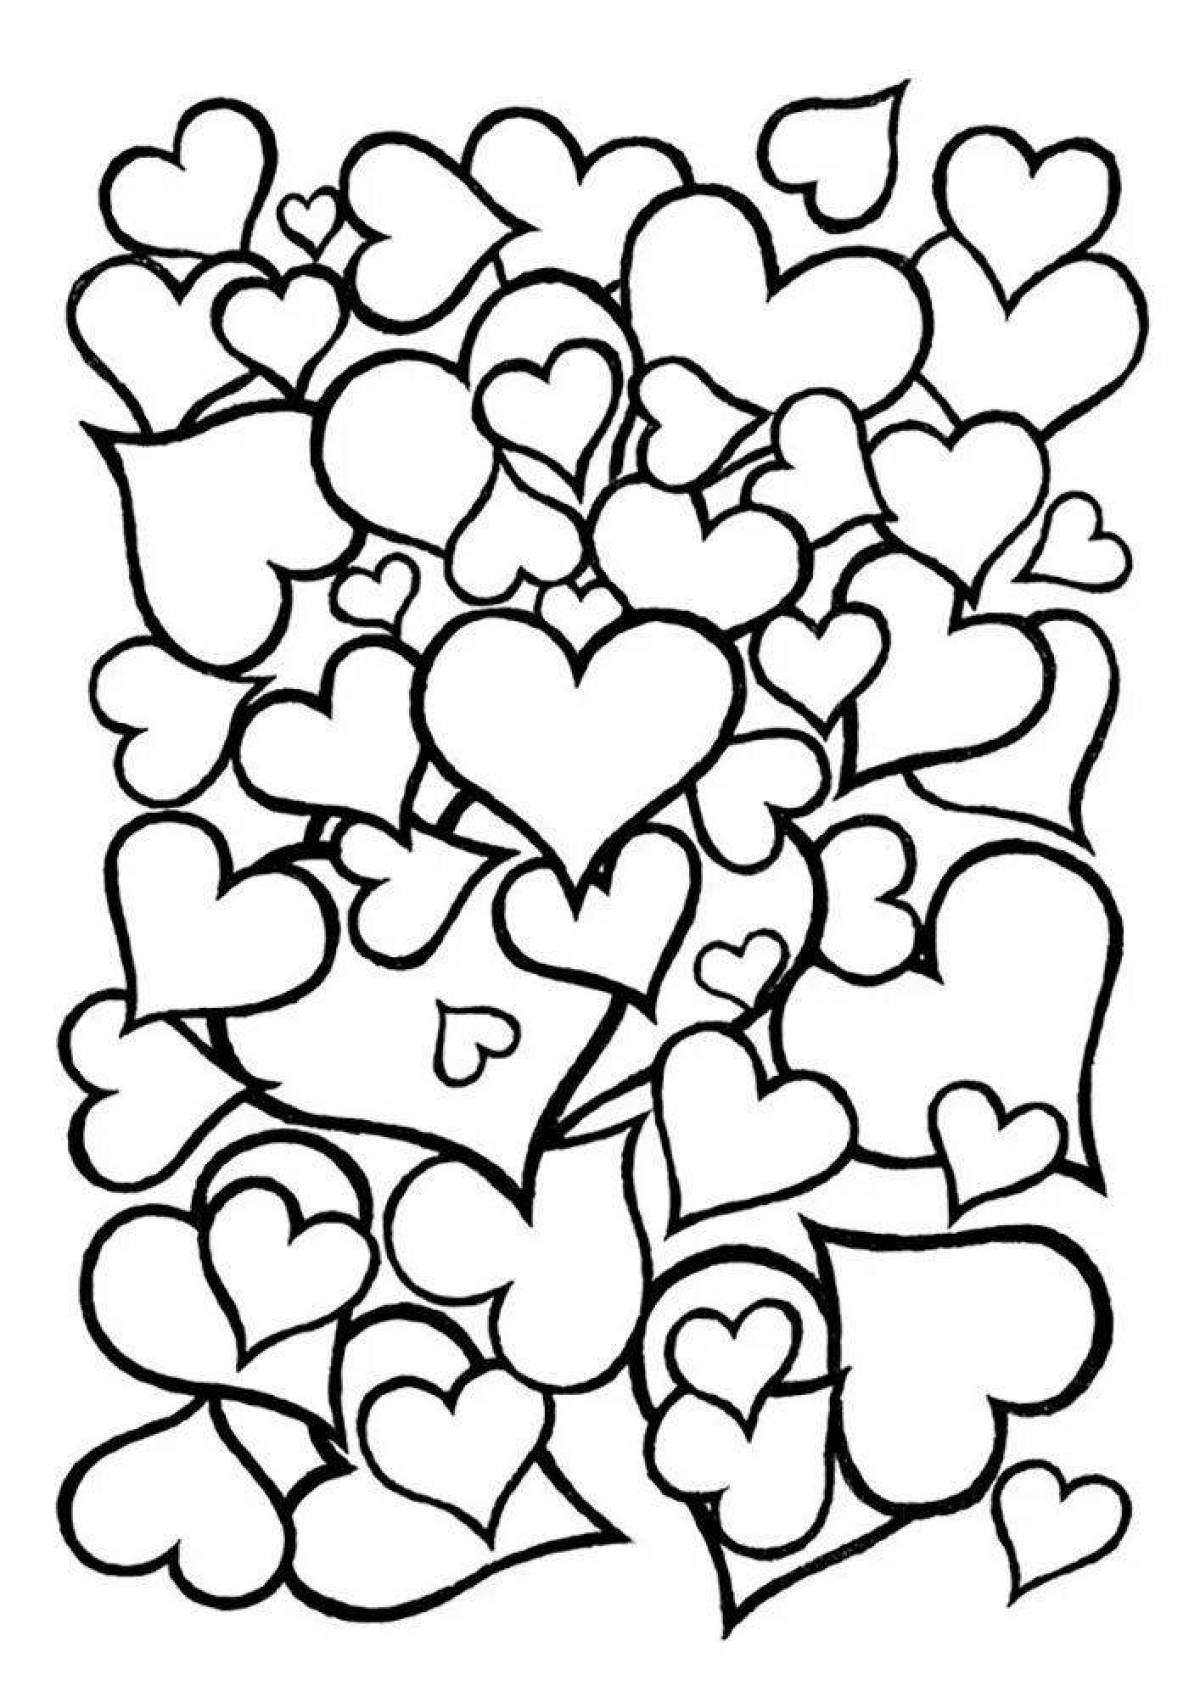 Joyful many hearts coloring page